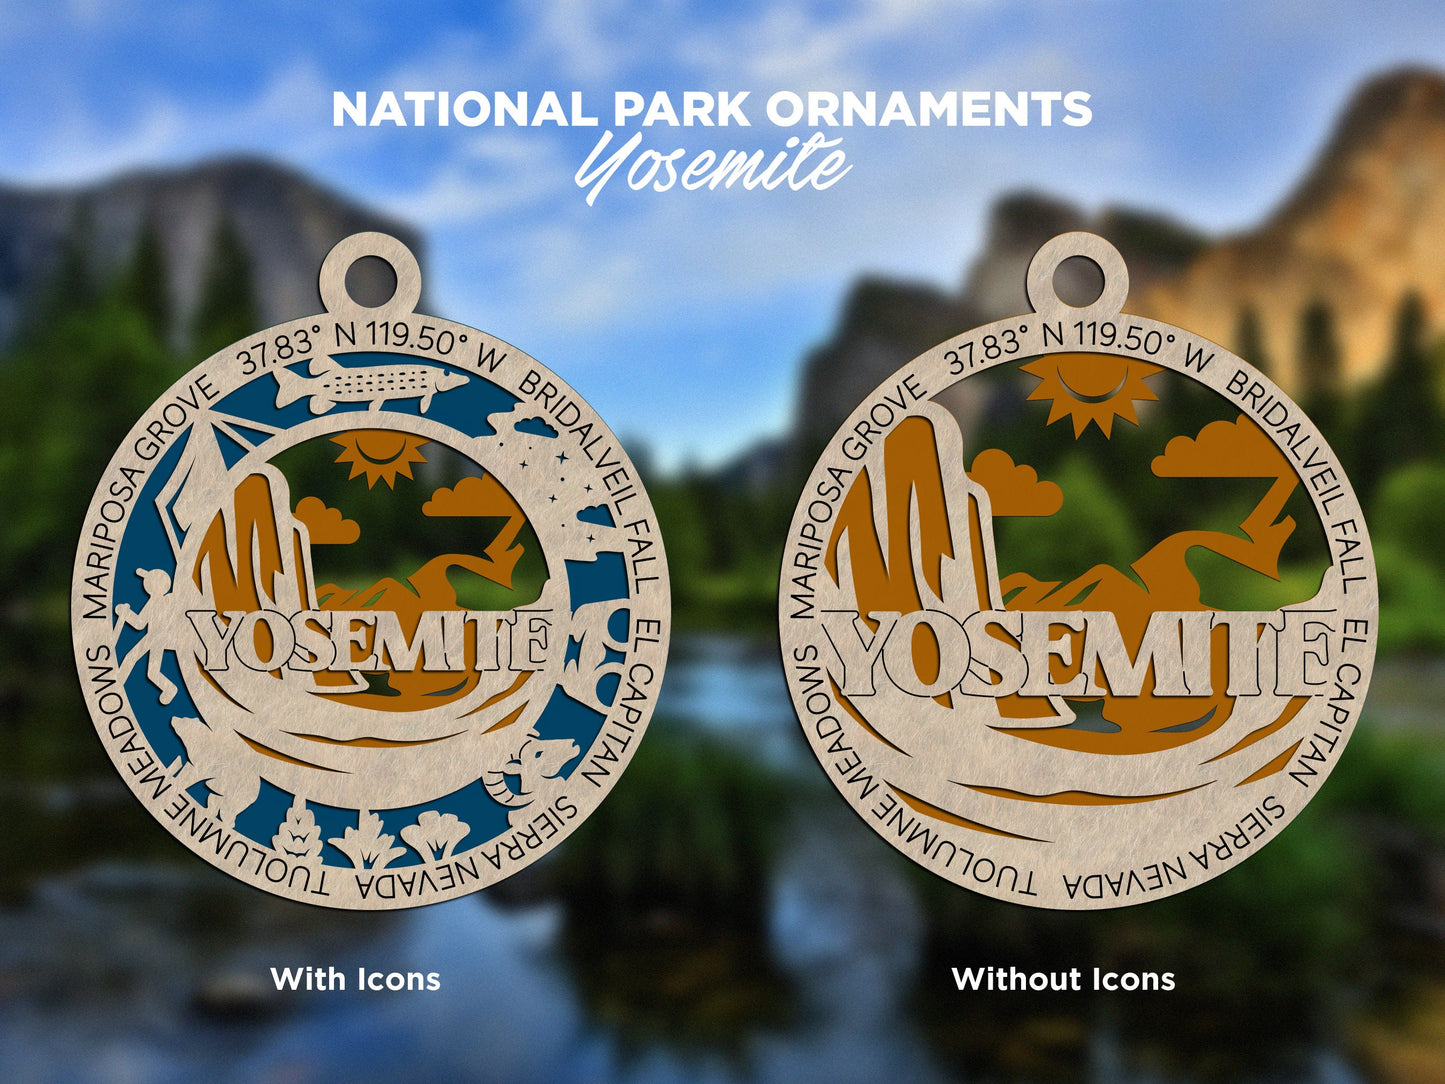 Yosemite Park Ornament - Includes 2 Ornaments - Laser Design SVG, PDF, AI File Download - Tested On Glowforge and LightBurn